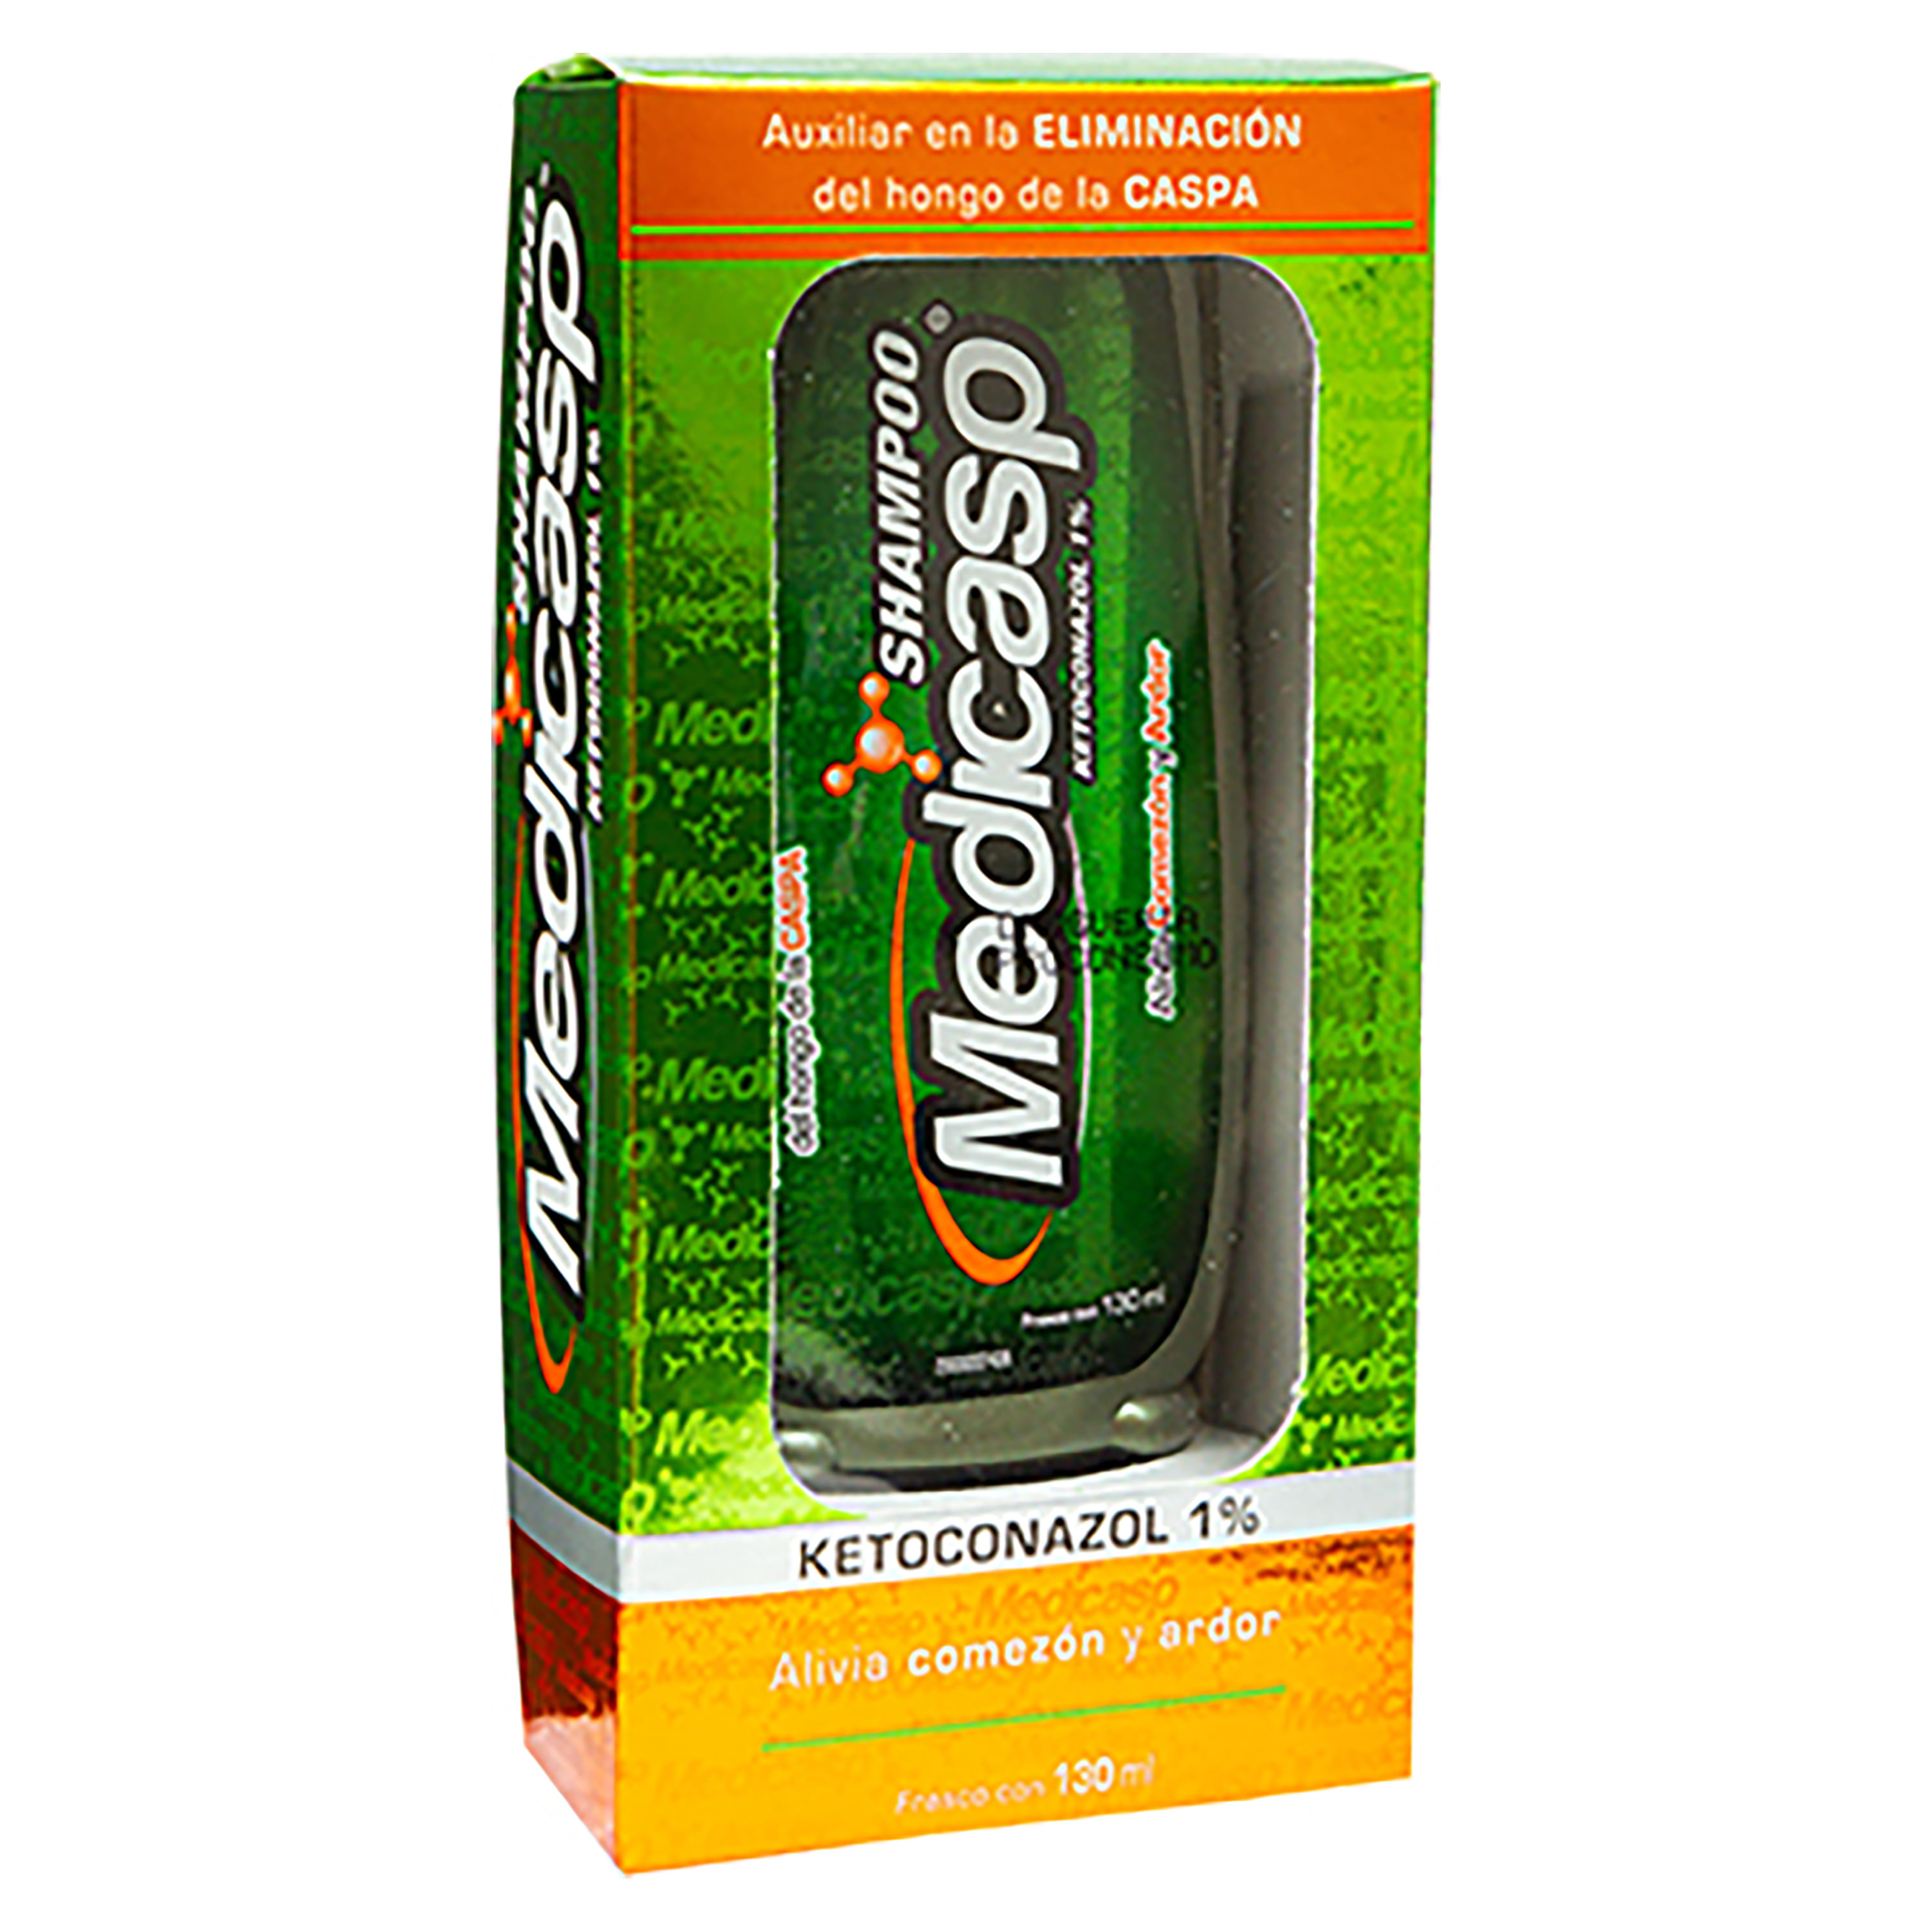 Bordenden Elegance Ydeevne Comprar Shampoo Medicasp - 130ml | Walmart Nicaragua